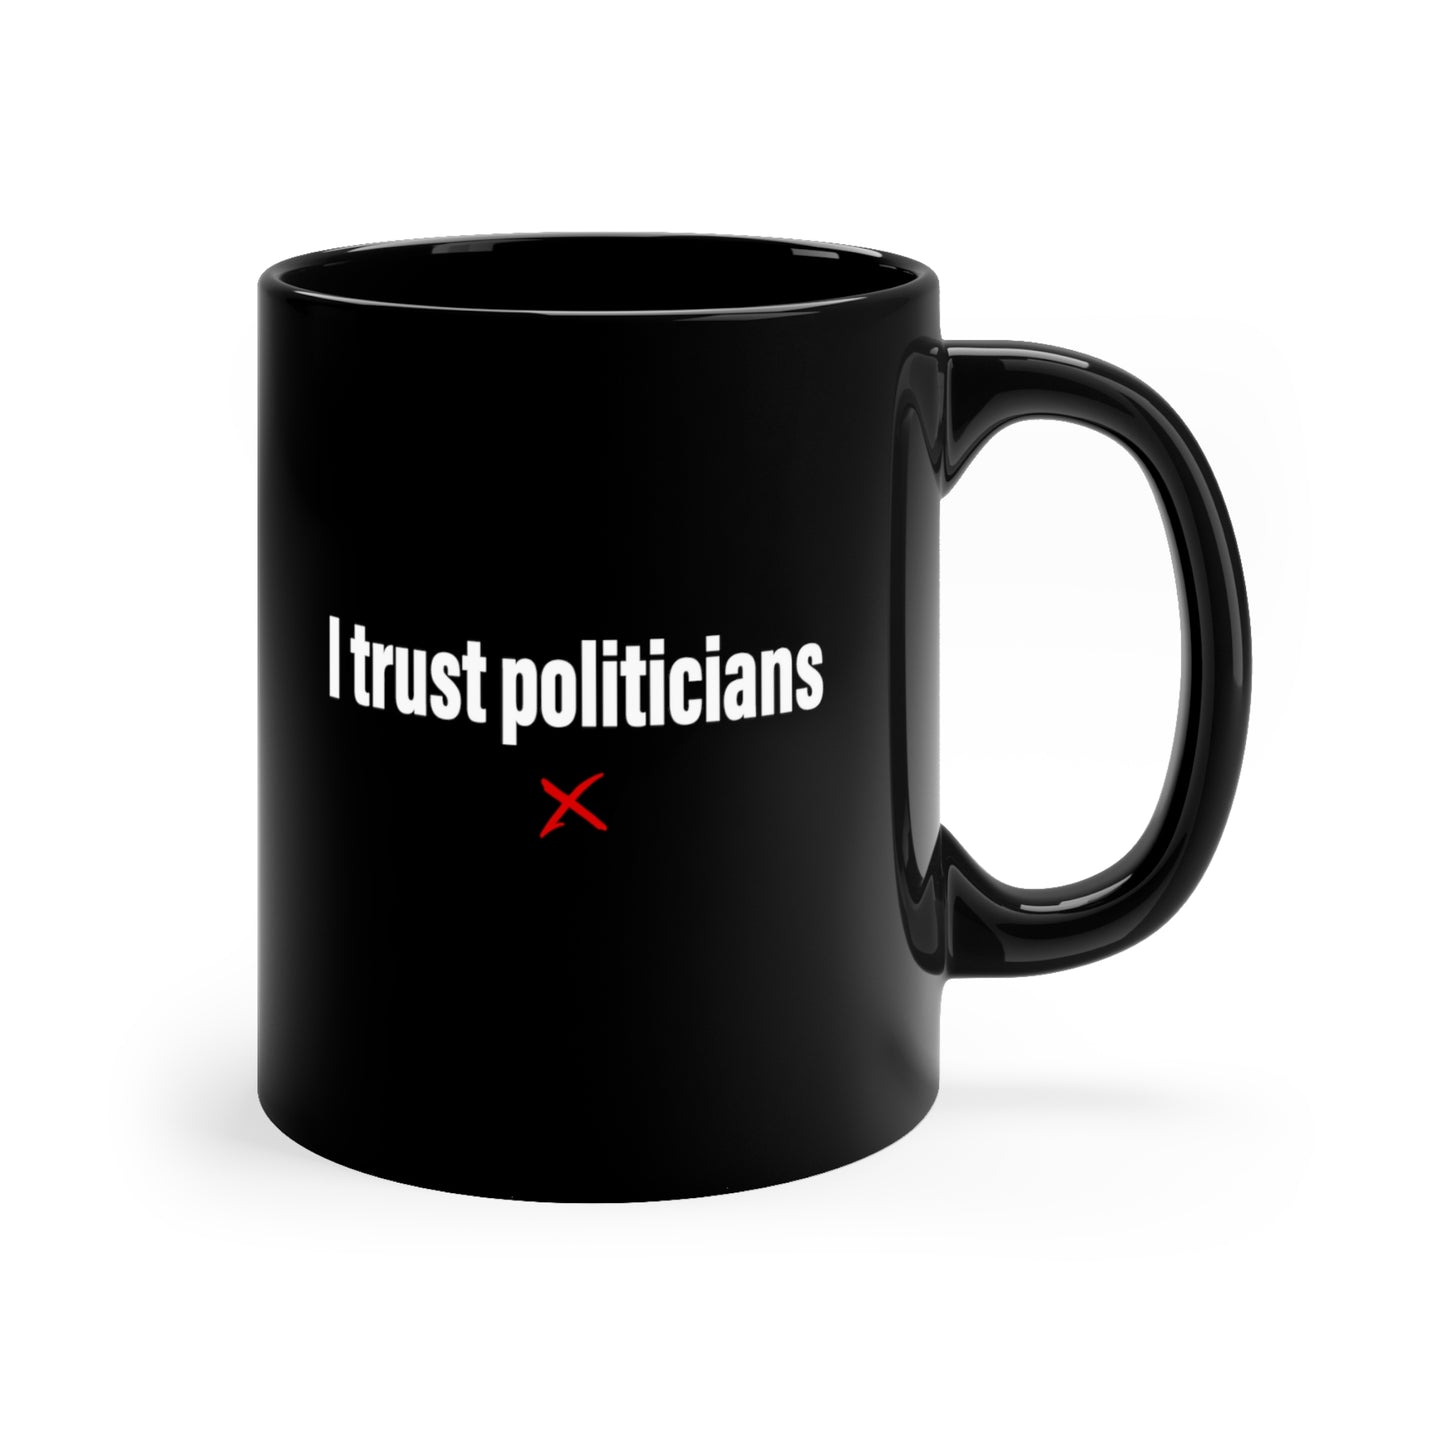 I trust politicians - Mug